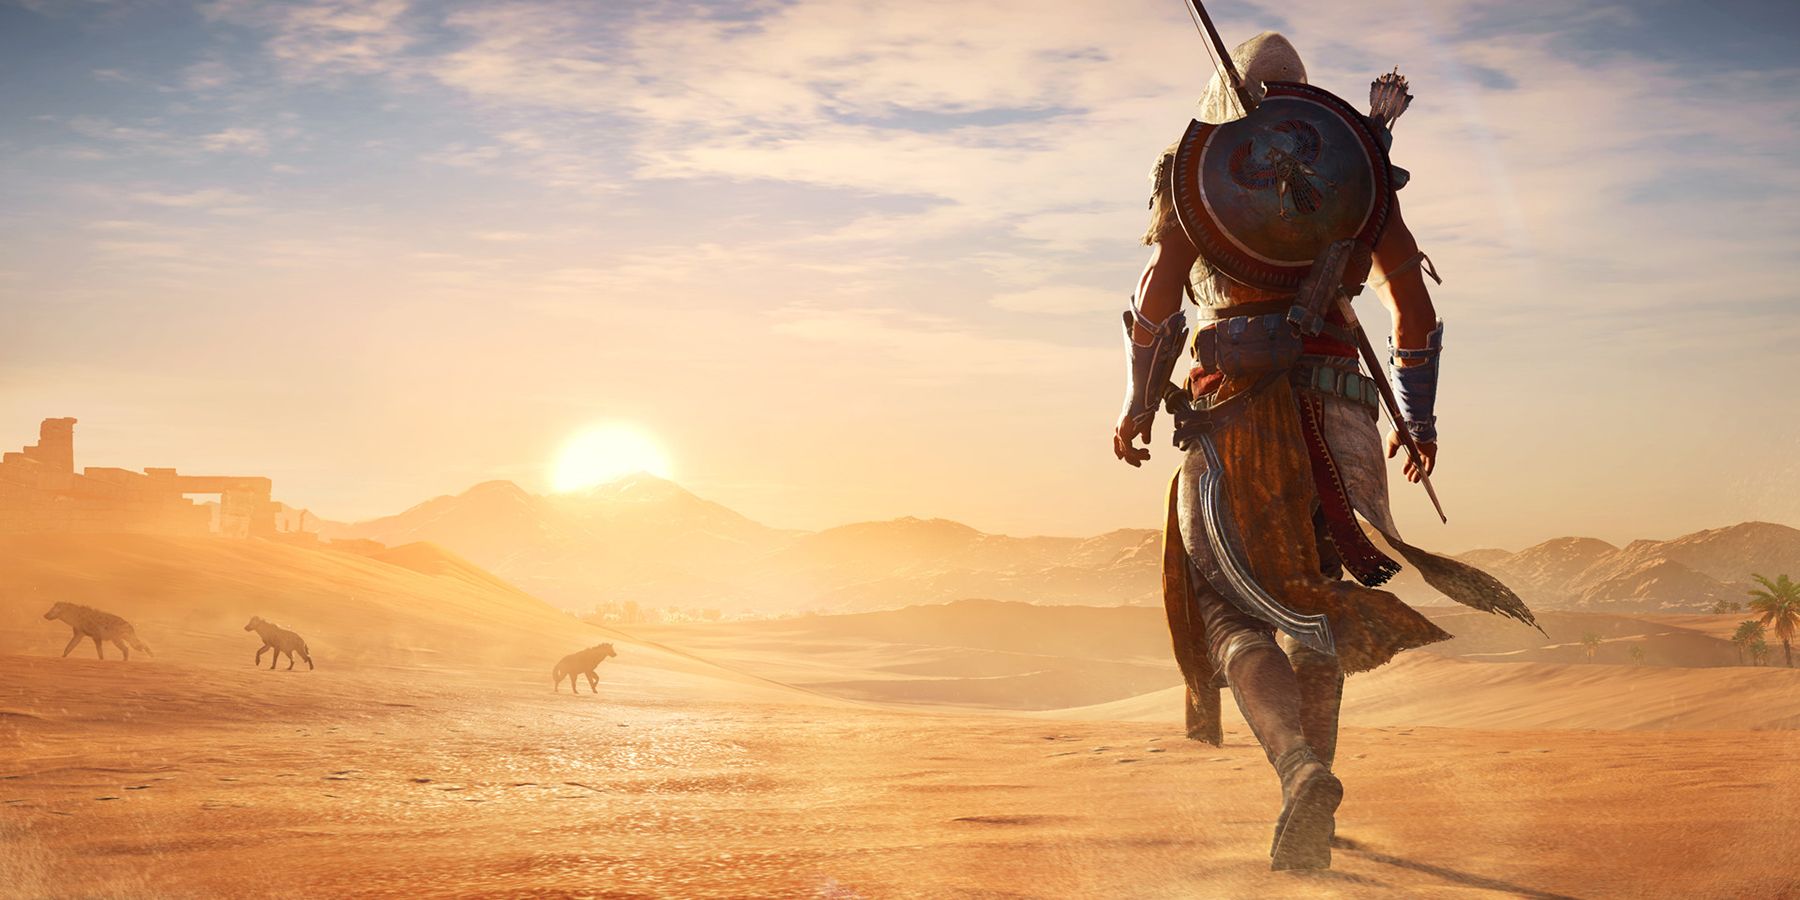 Protagonist Bayek walking towards the desert during the sunset in Assassins Creed Origins.